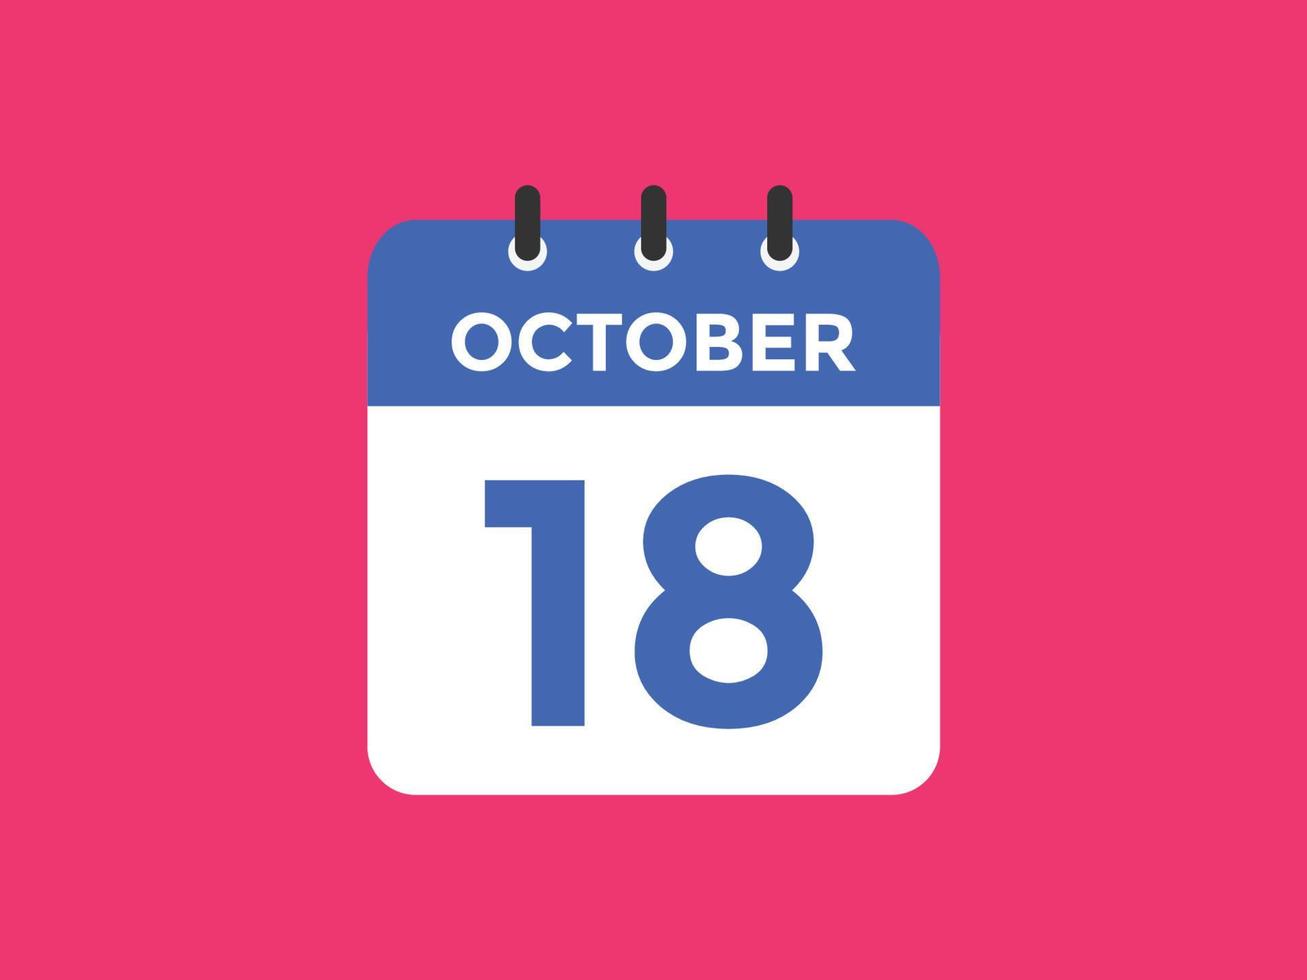 october 18 calendar reminder. 18th october daily calendar icon template. Calendar 18th october icon Design template. Vector illustration